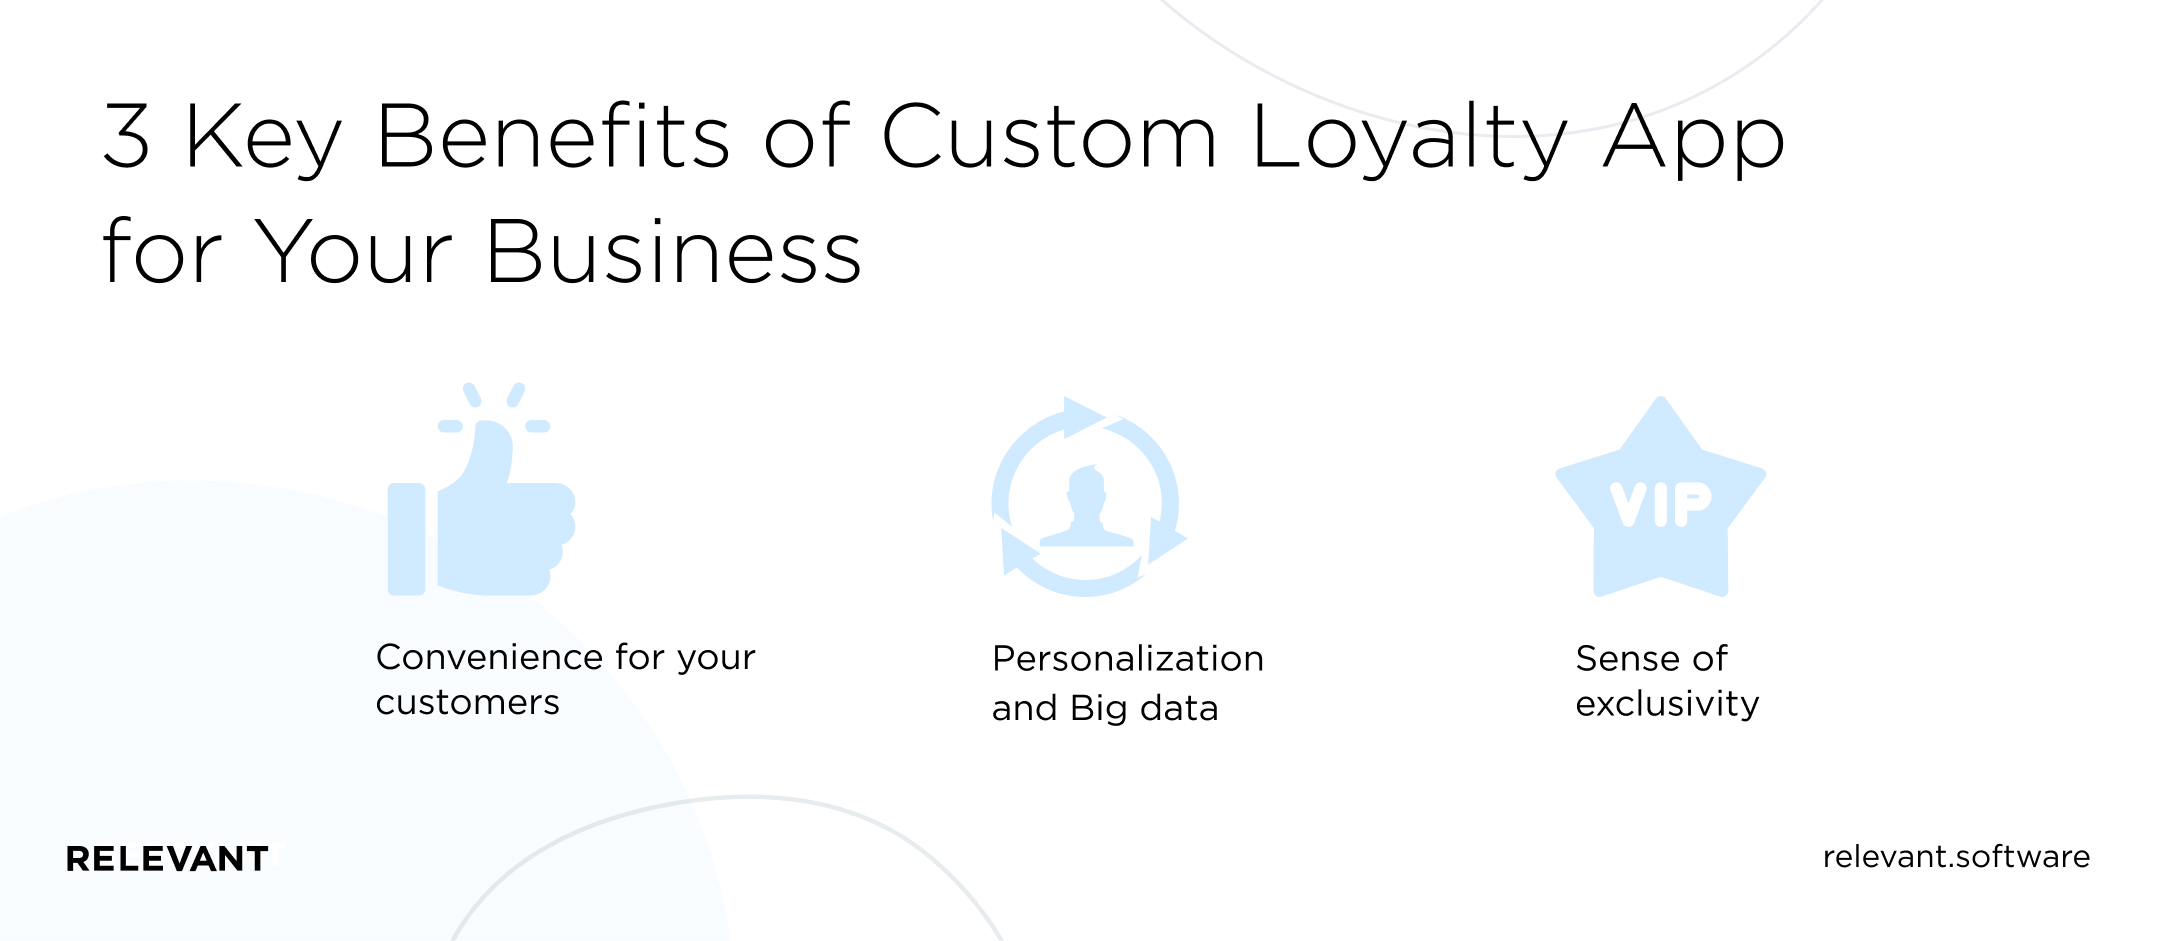 Custom Loyalty App Development: How to Do It Right